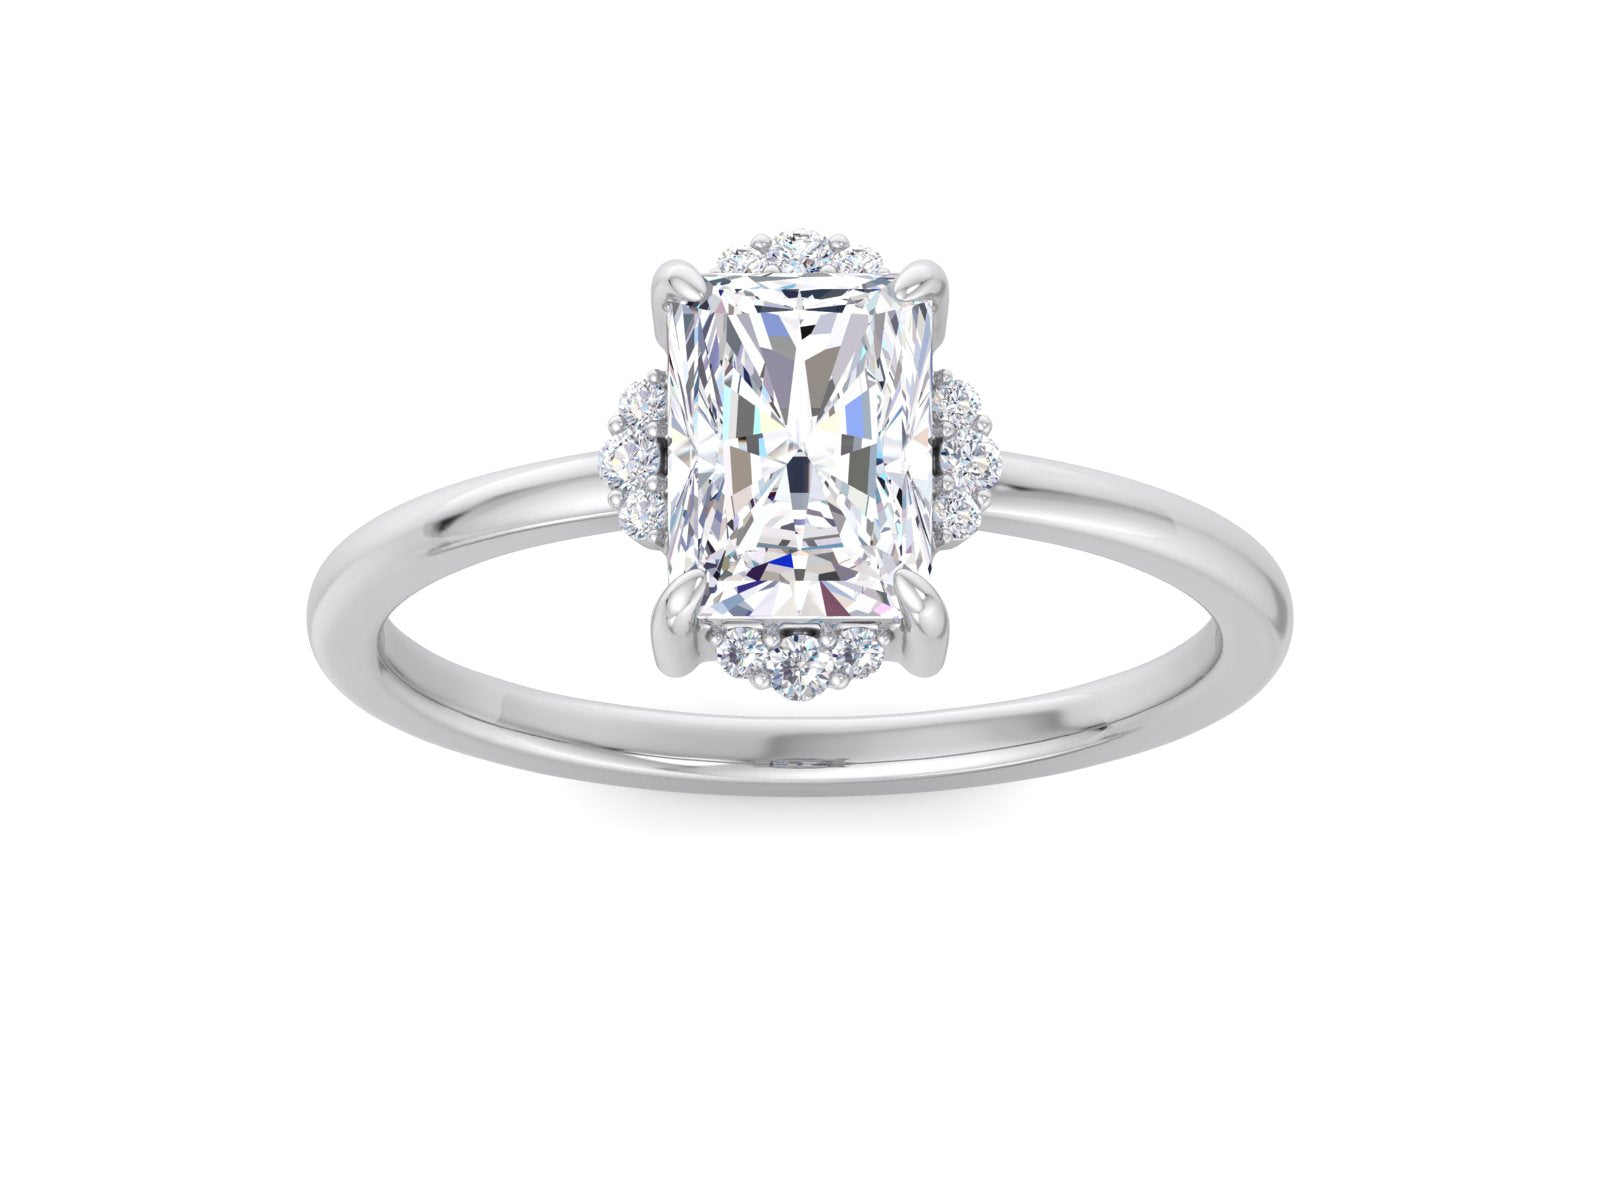 1.45 Carat Emerald Cut Engagement Ring